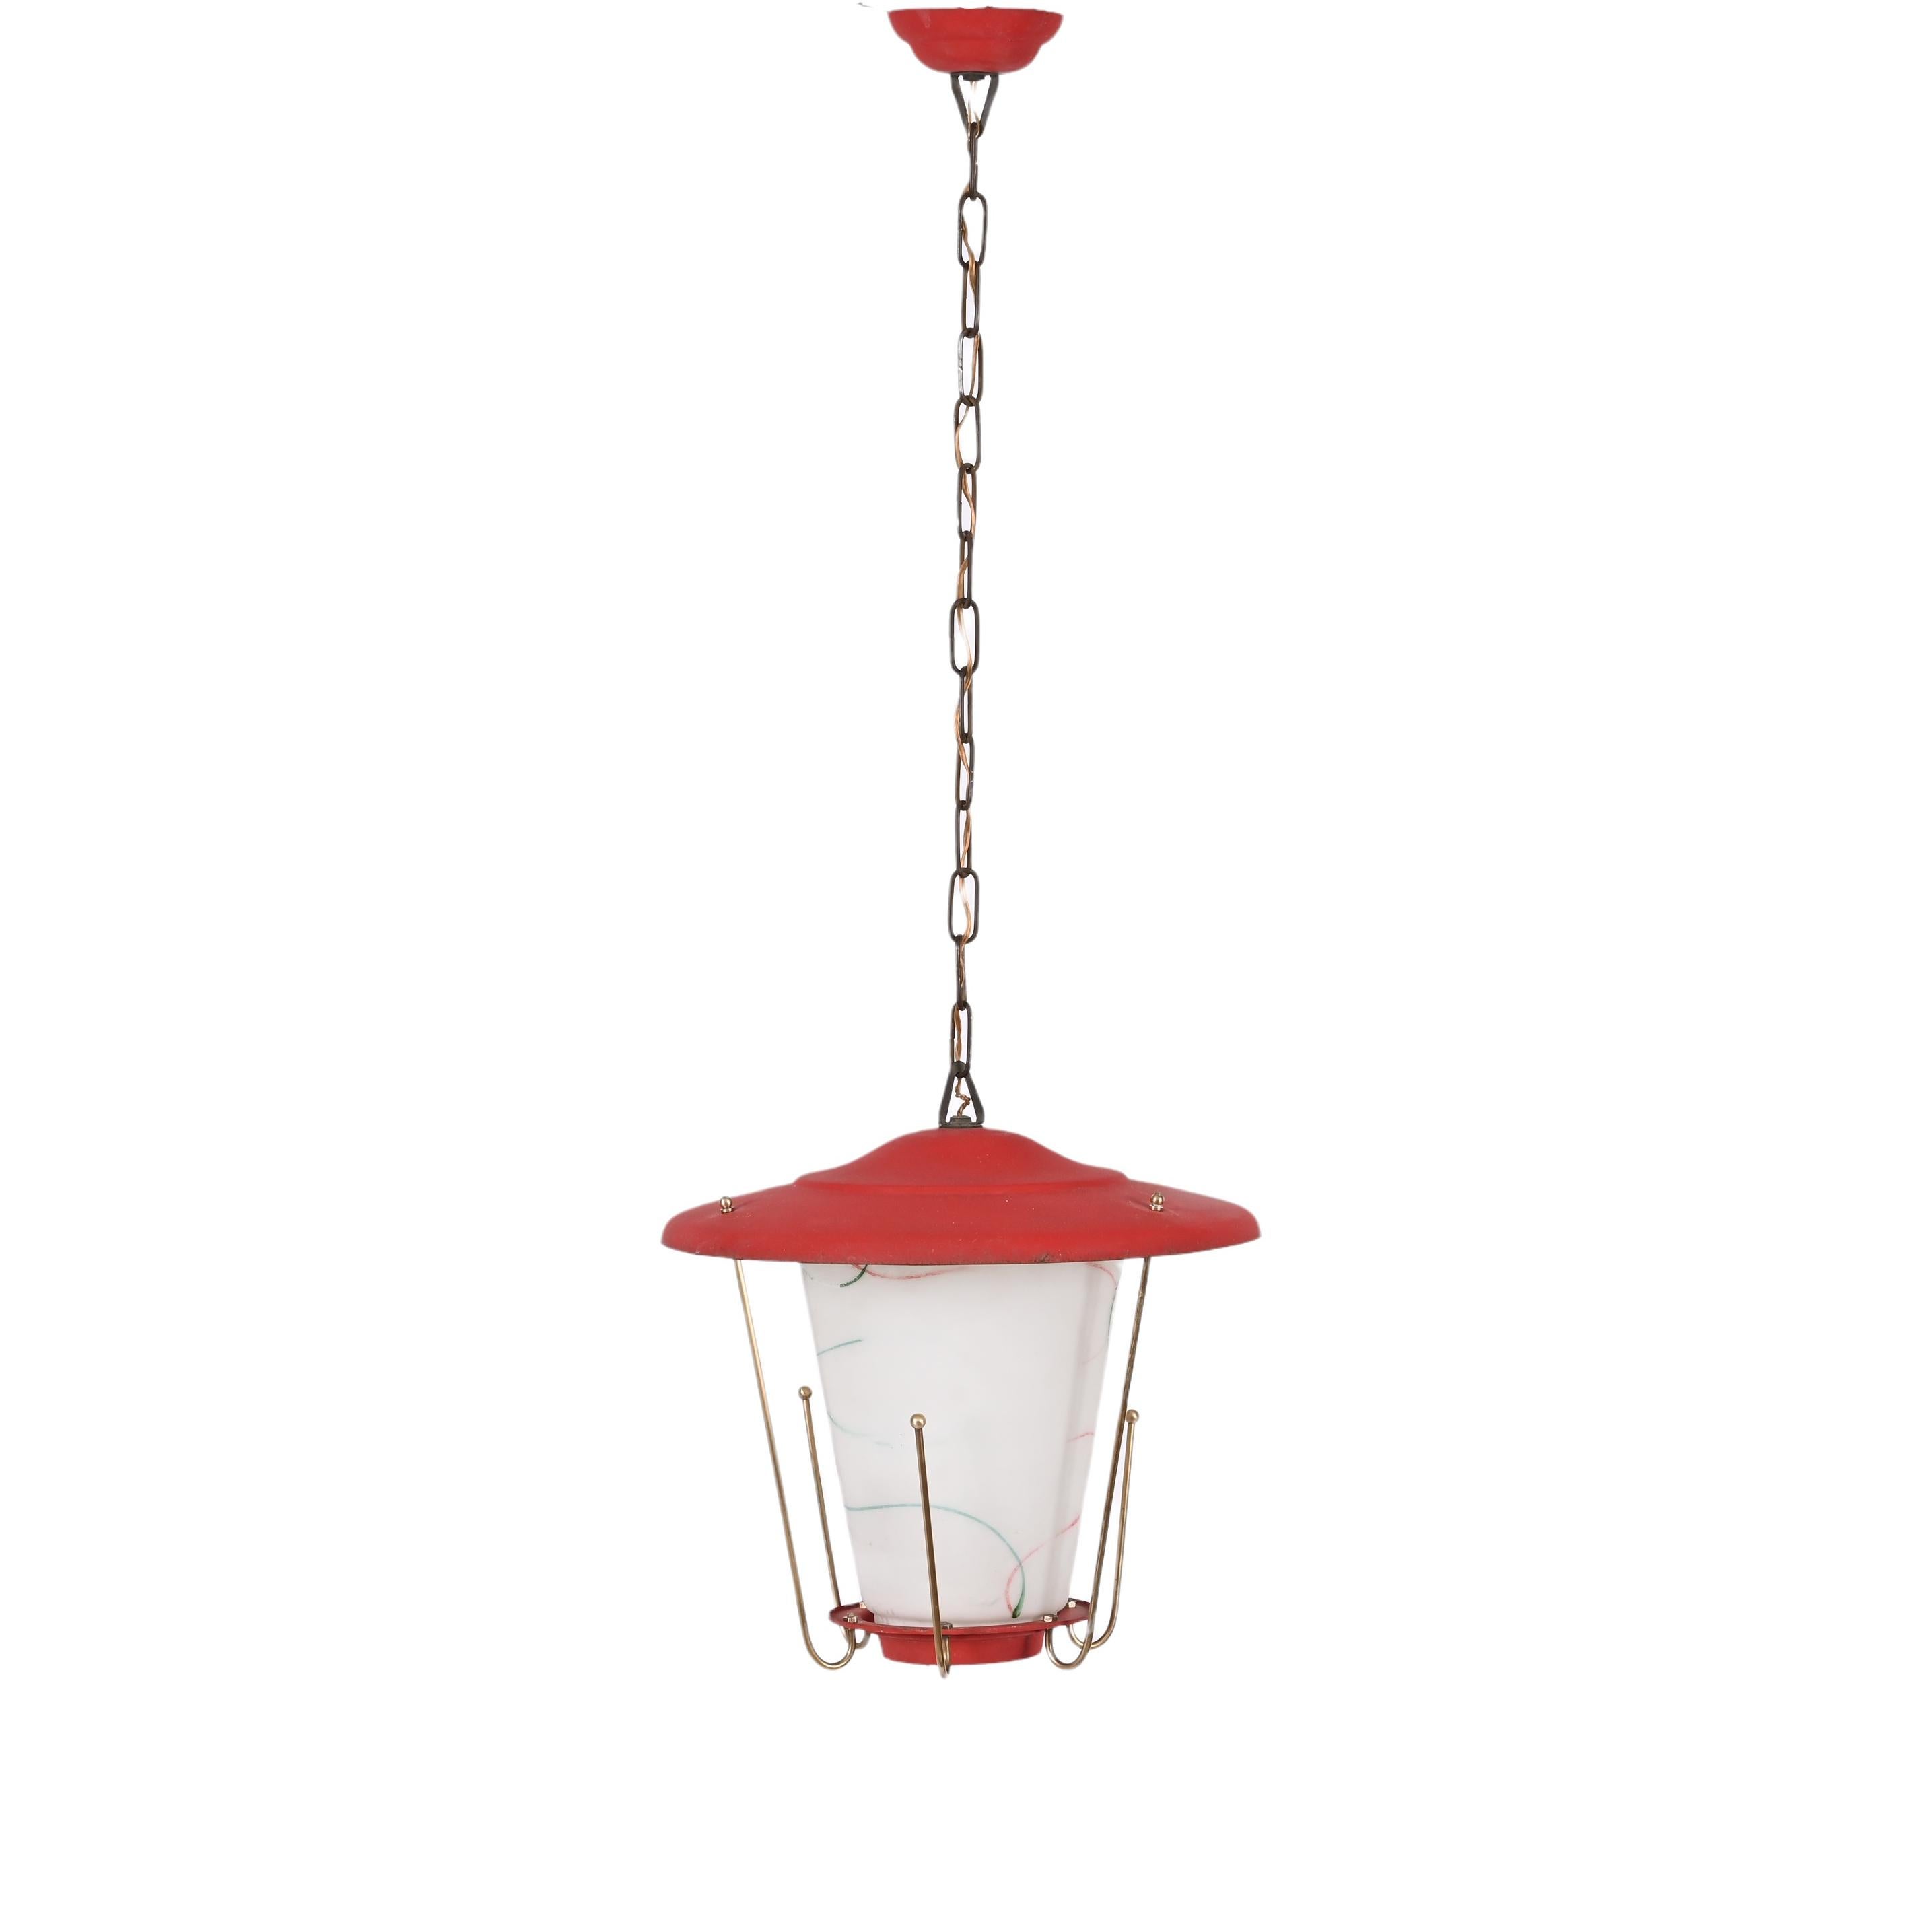 Mid-Century Modern Midcentury Round Opaline Glass and Brass Italian Red Lantern Chandelier, 1950s For Sale